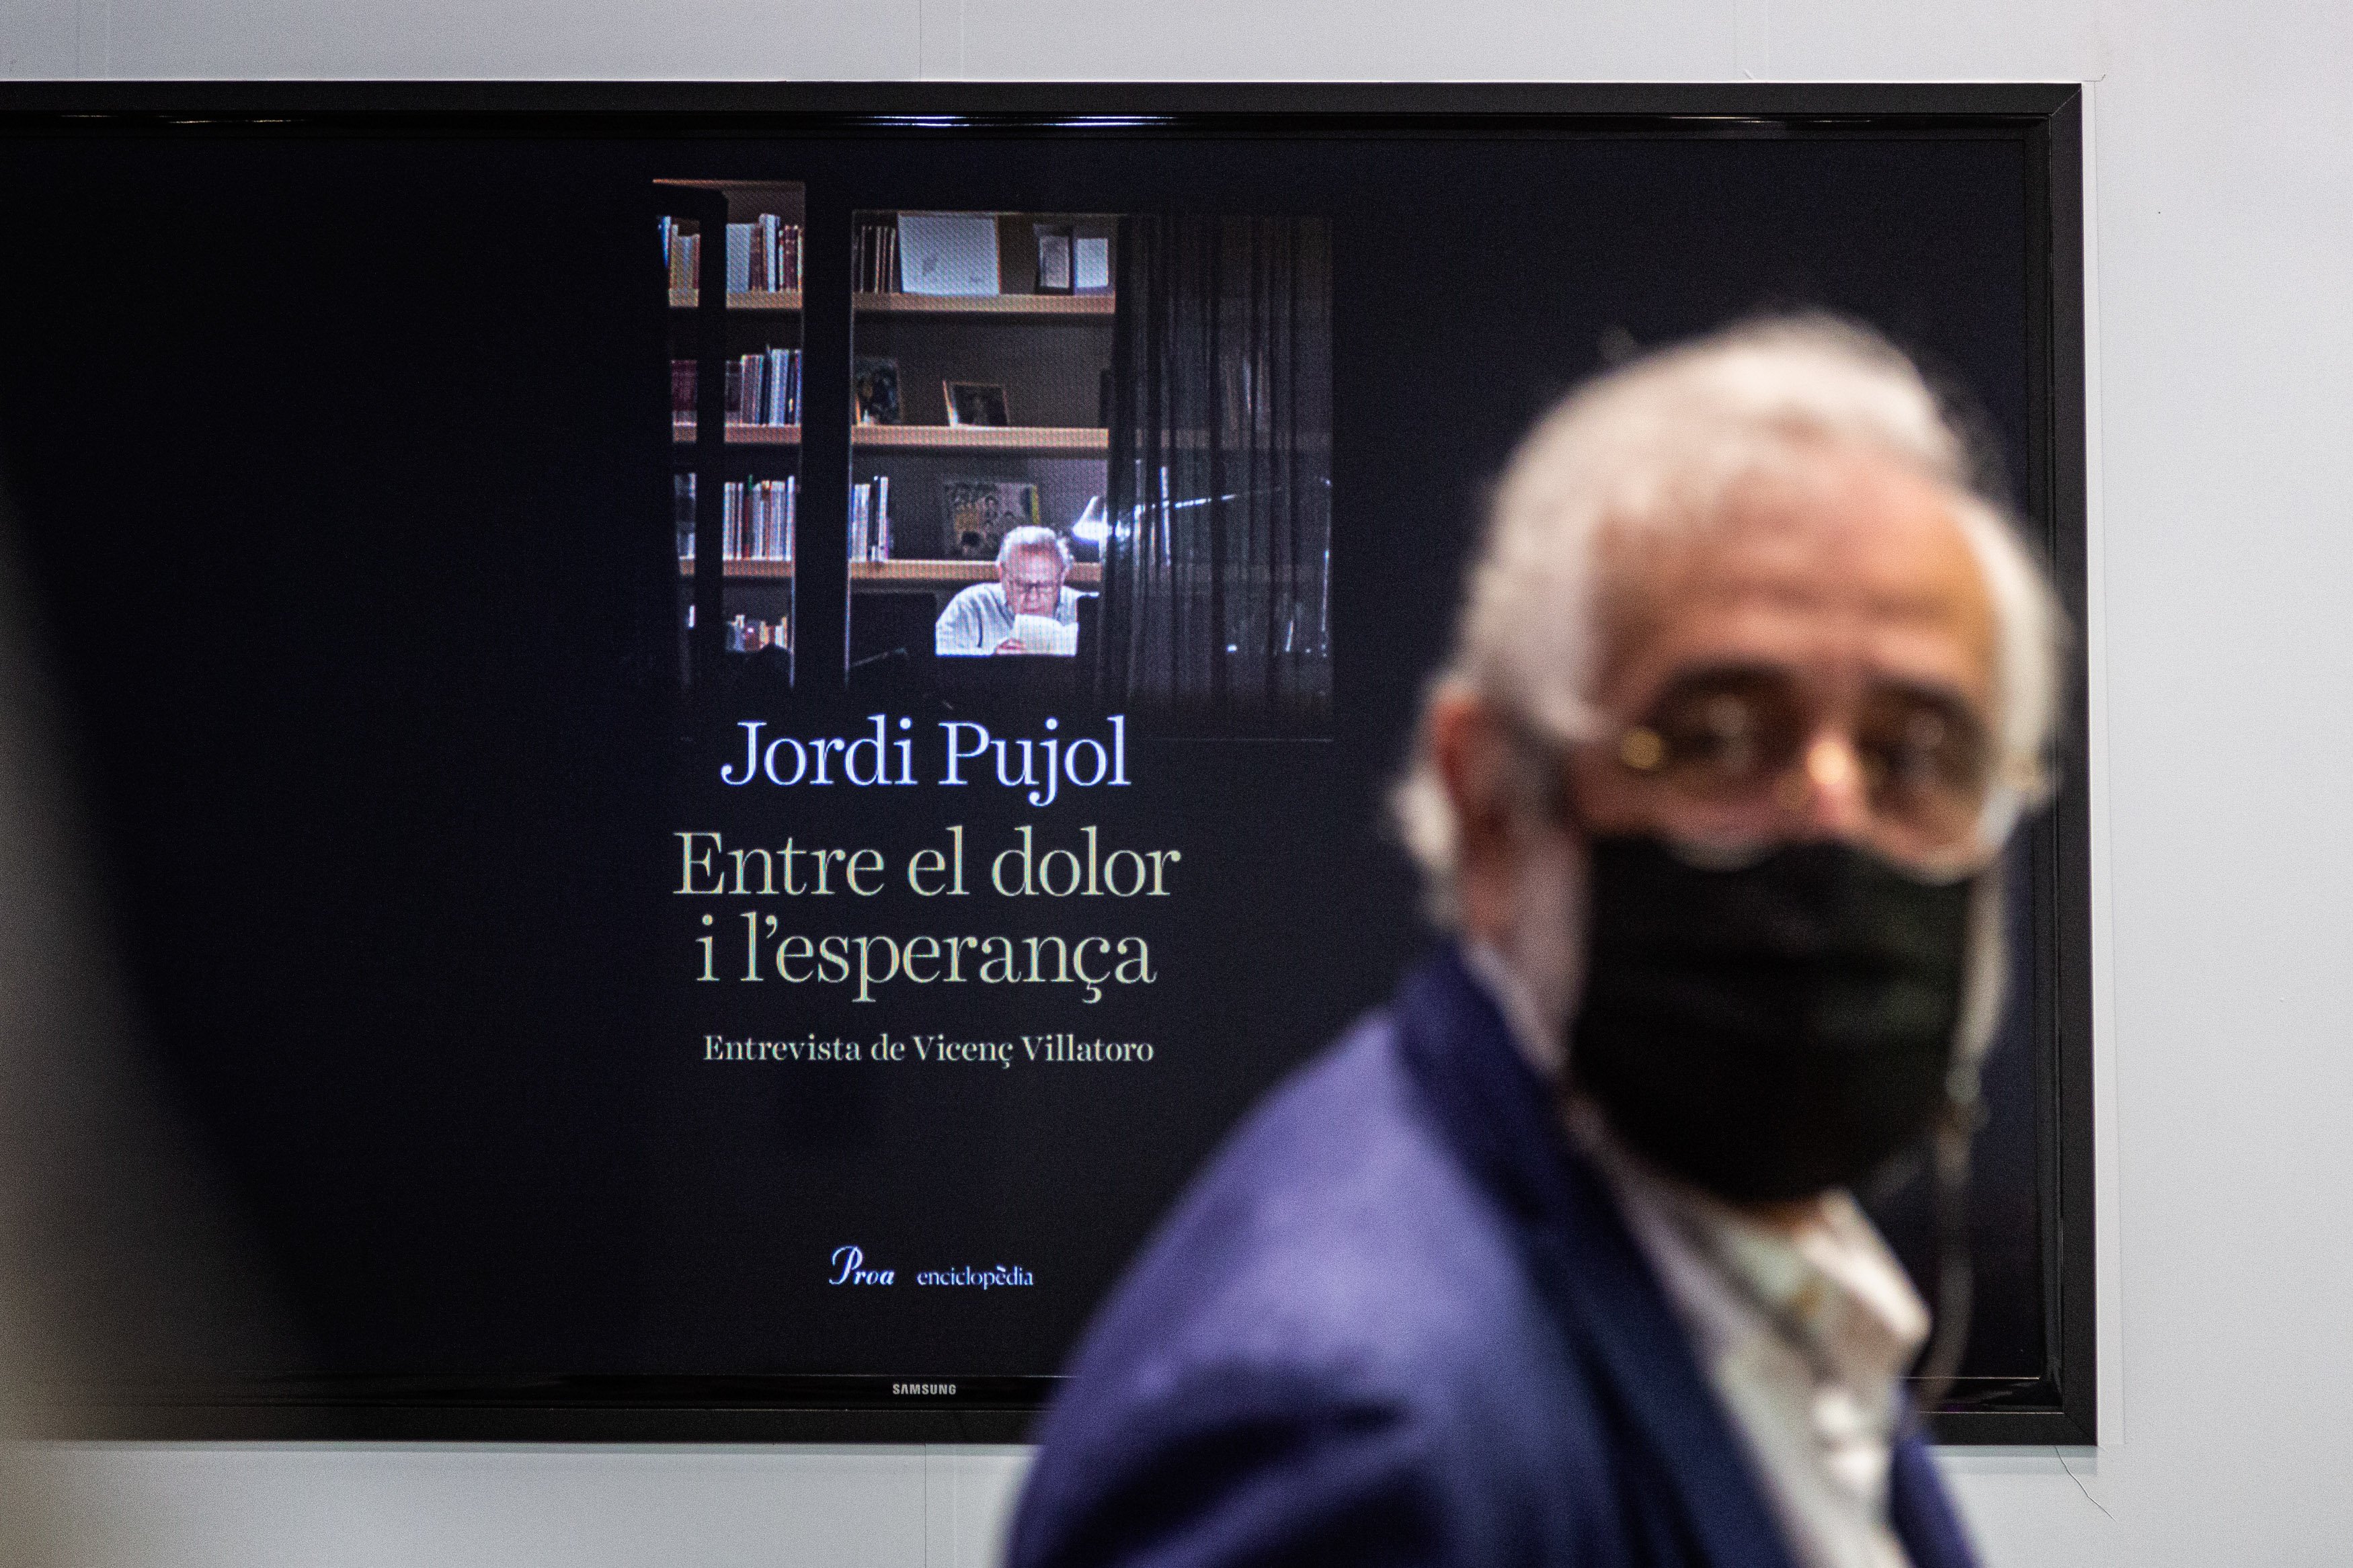 Herein, the will and testament of Jordi Pujol